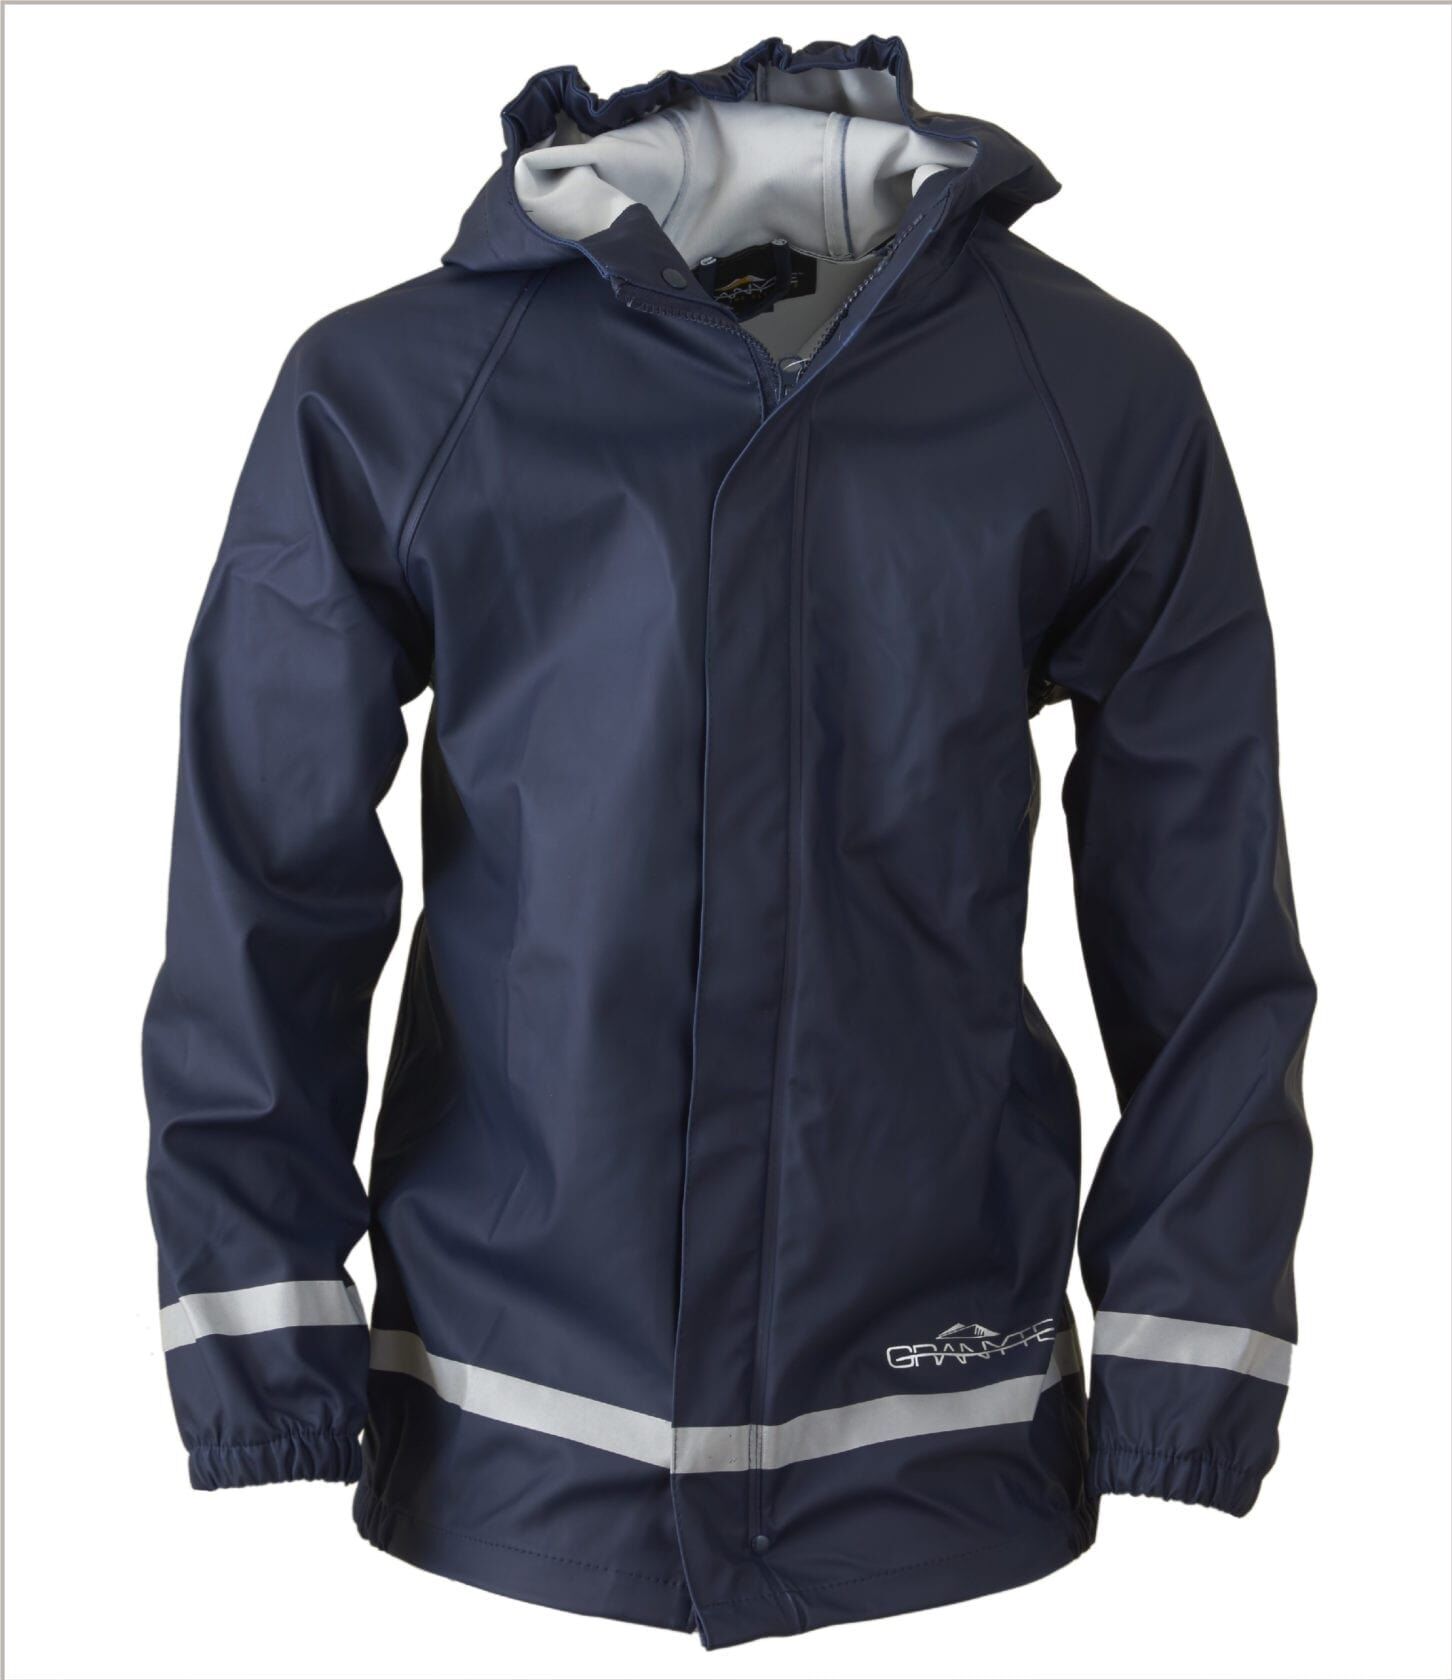 G50Y-Navy-1 jacket.jpg